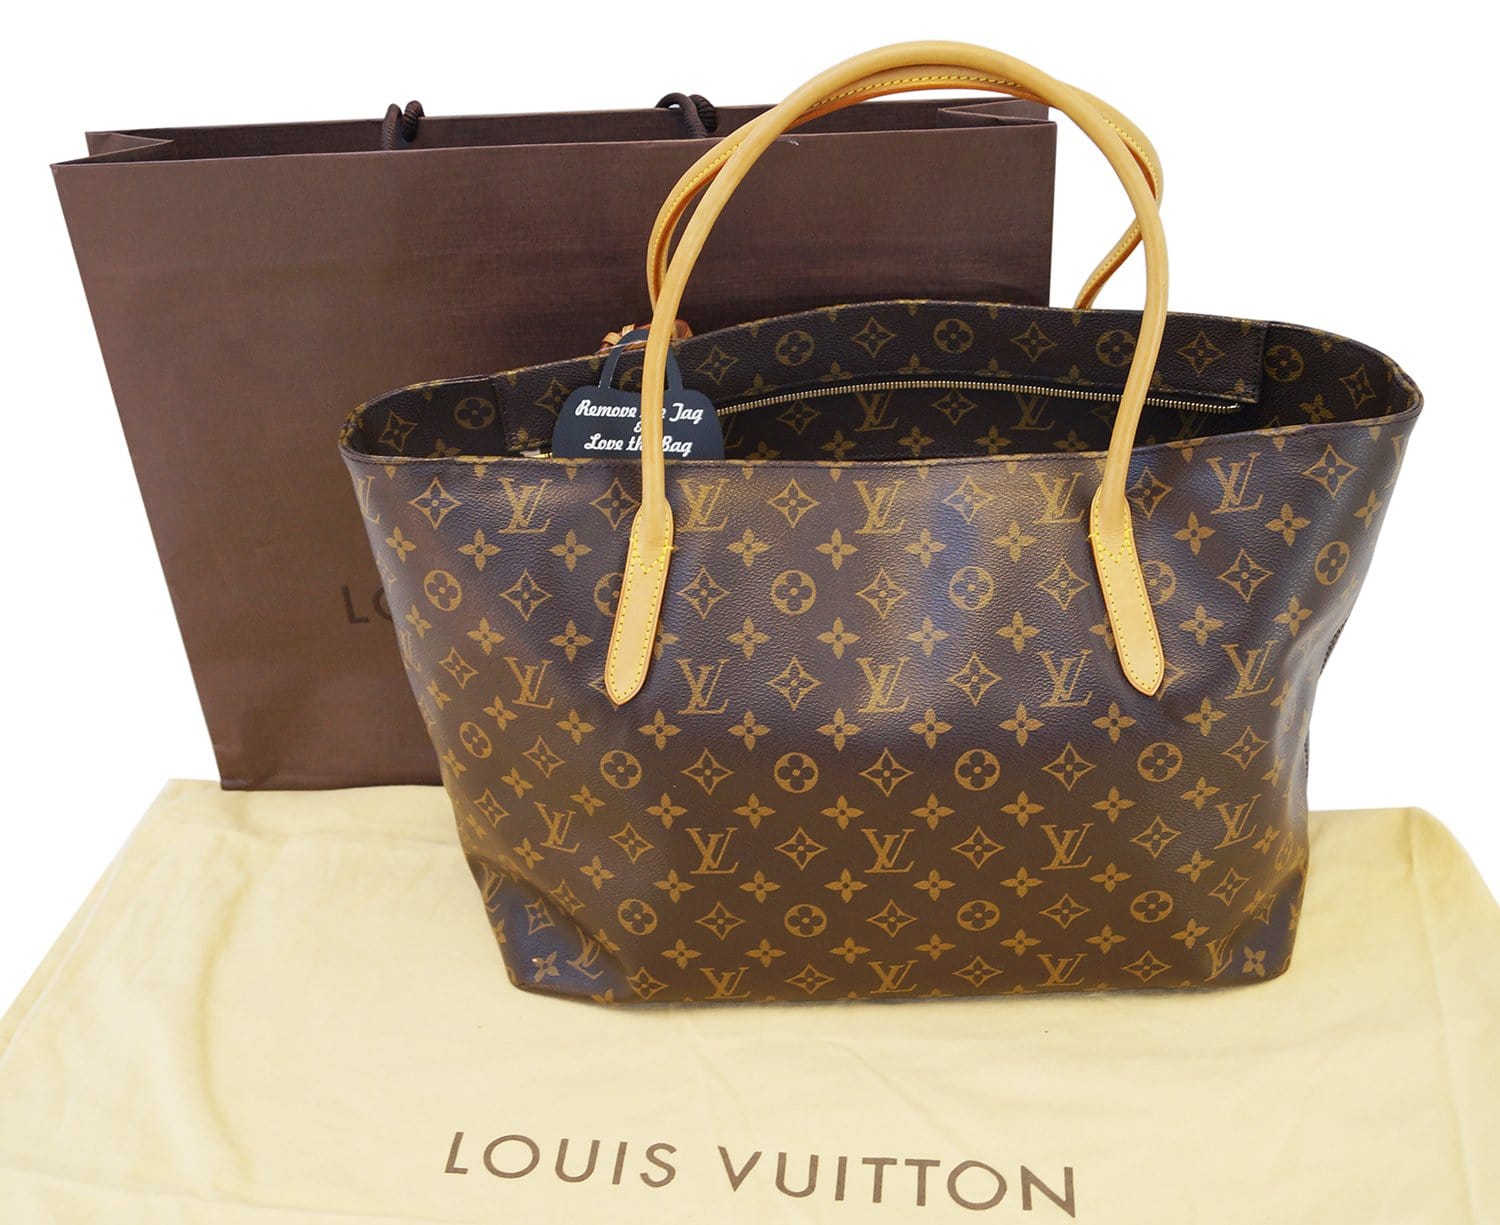 Louis Vuitton Raspail bag Free Shipping Worldwide✈️ DM for more